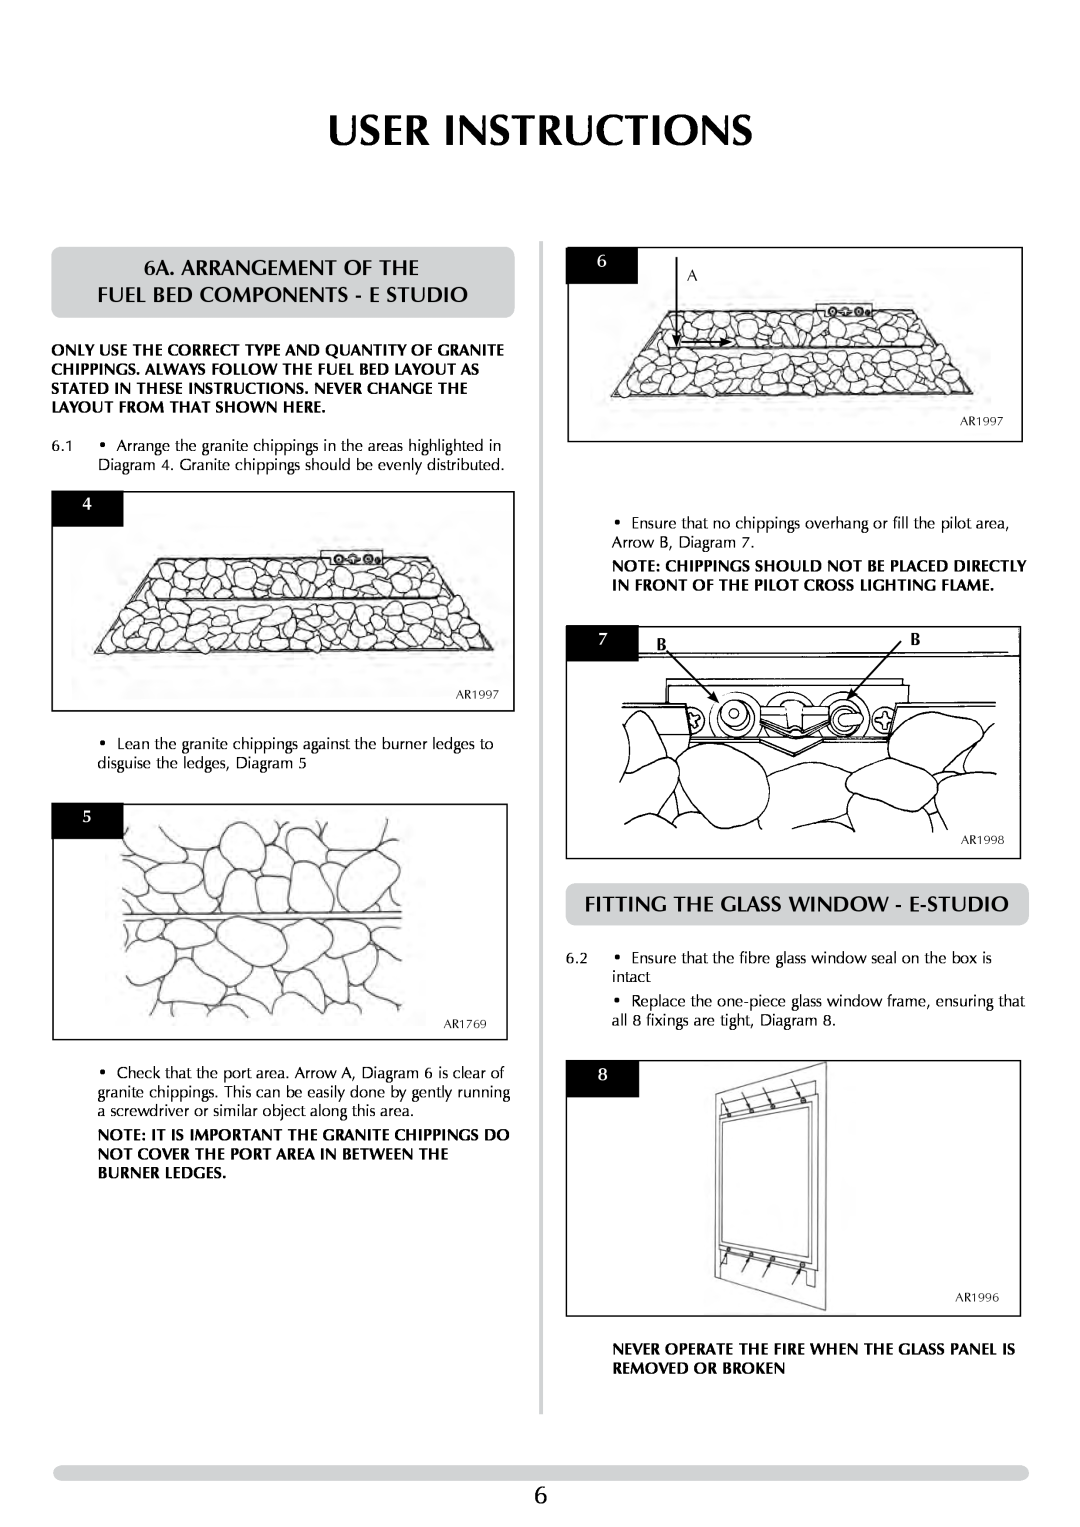 Stovax PR0776 manual 6A. ARRANGeMENT OF THE FUEL BED COMPONENTS - E STUDIO, Fitting The Glass Window - E-Studio 